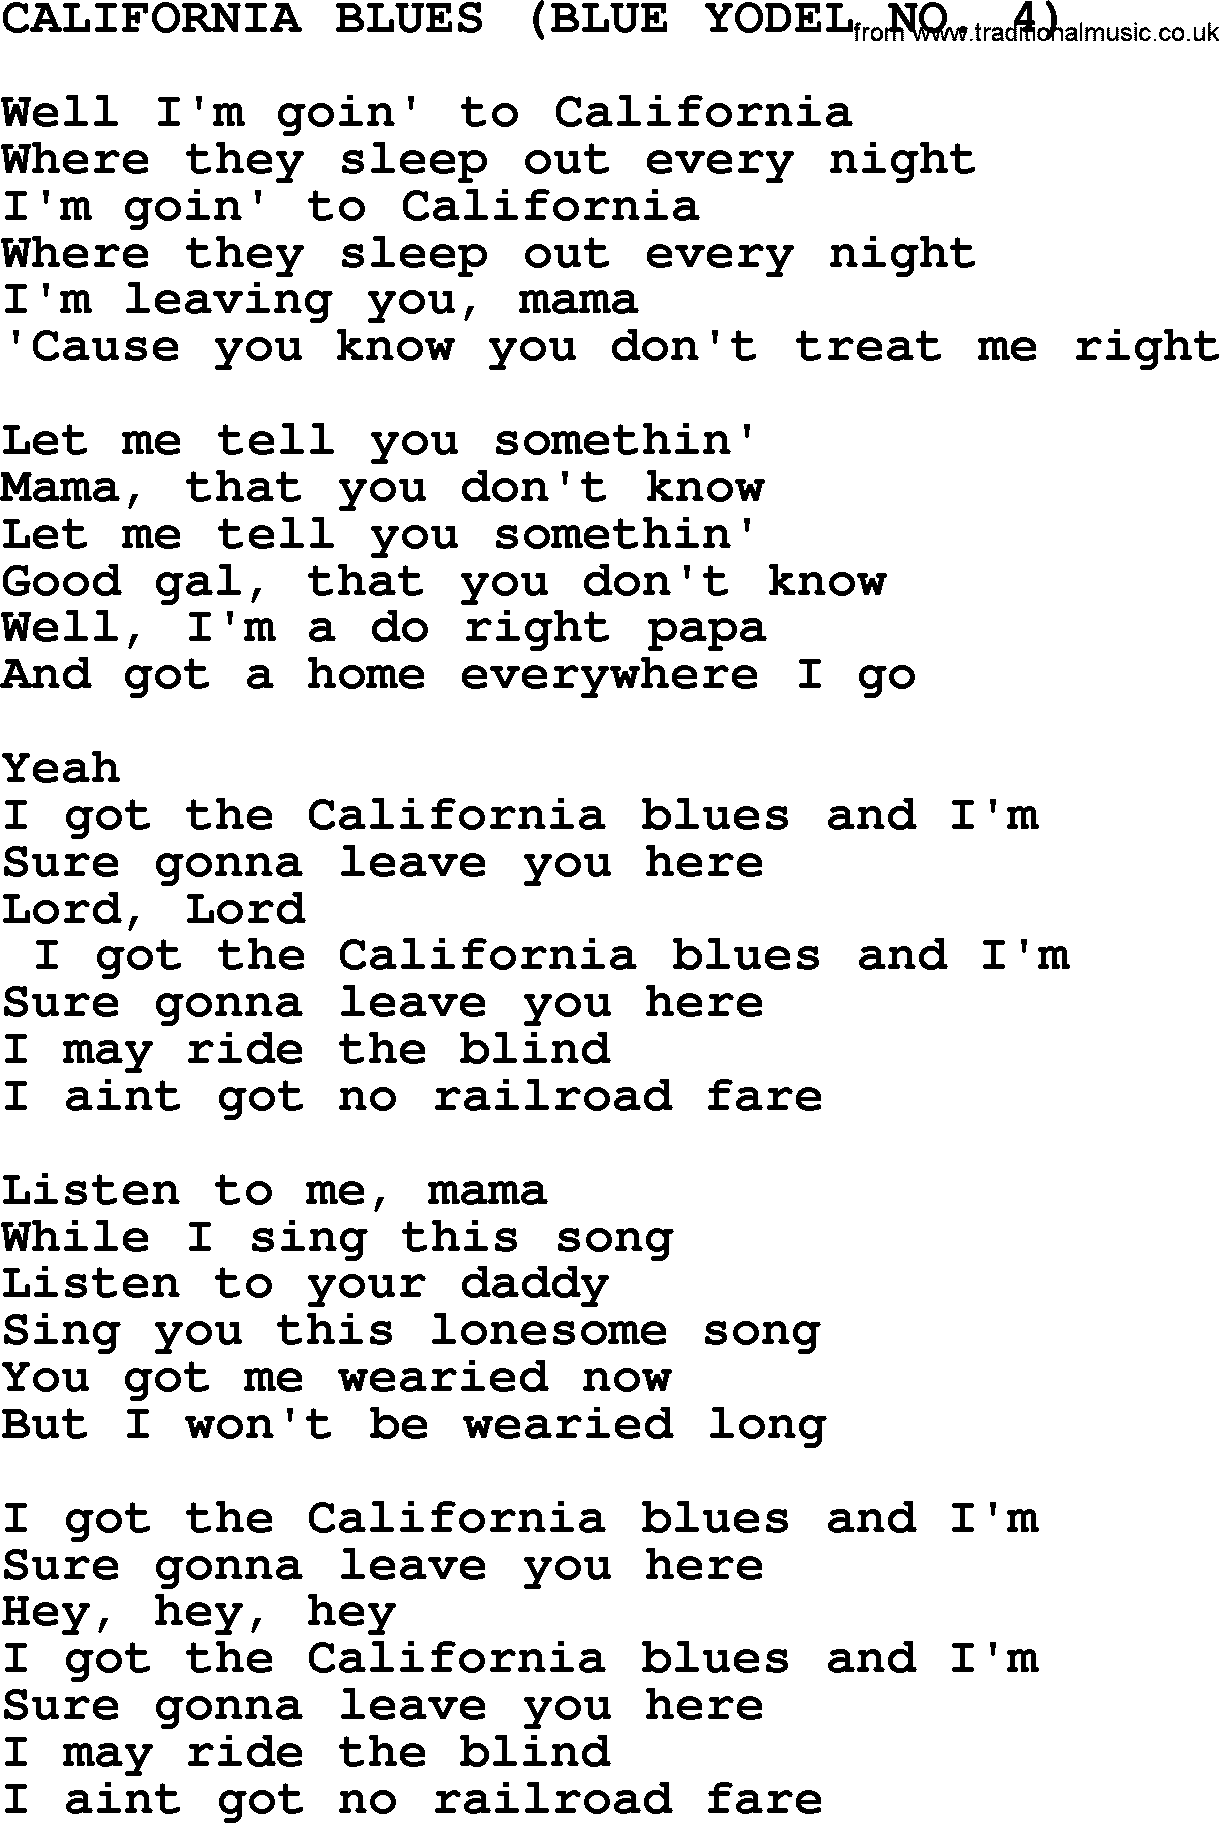 Merle Haggard song: California Blues Blue Yodel No 4, lyrics.